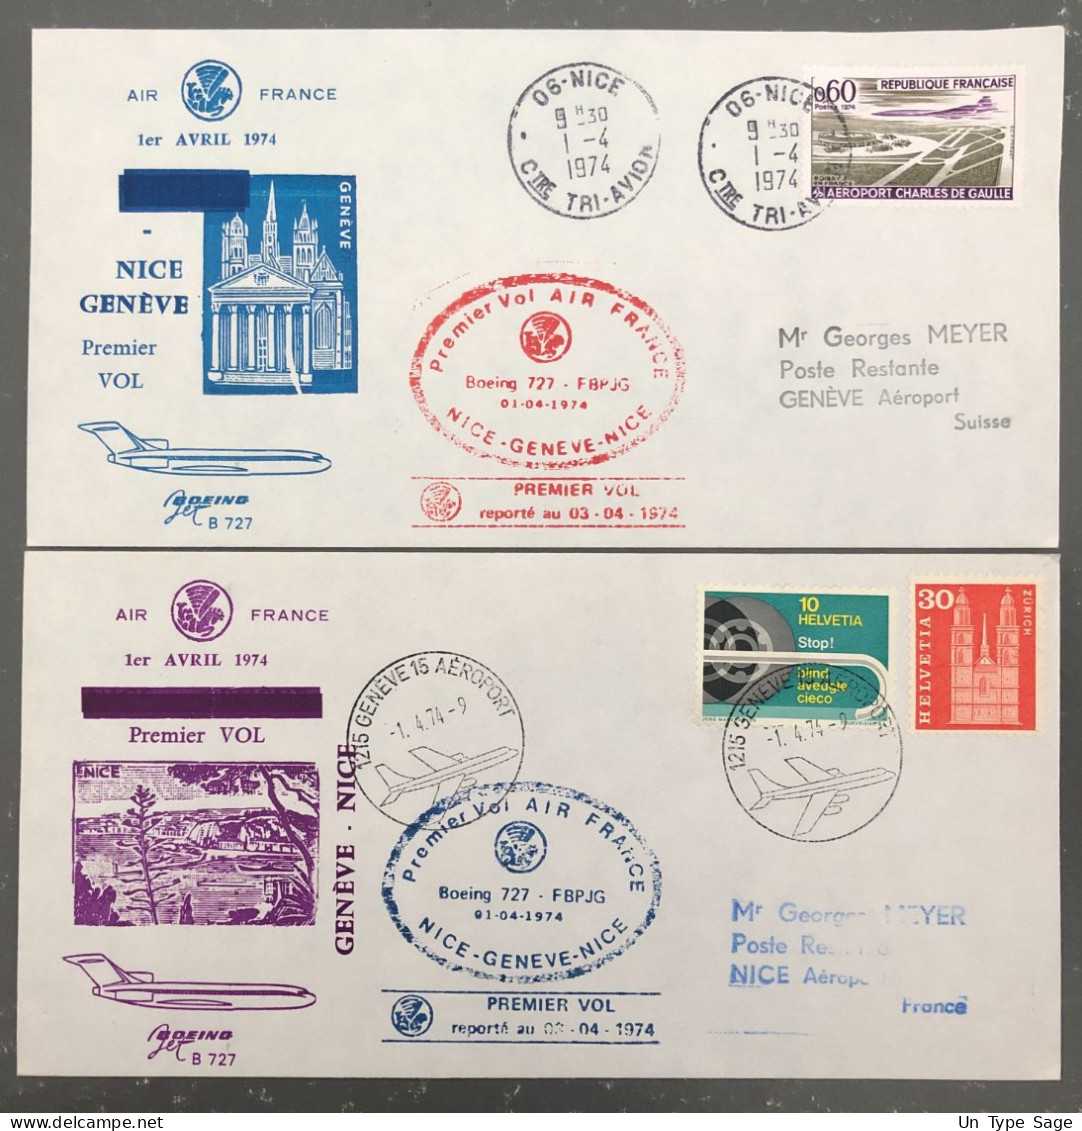 France, Premier Vol Nice, Genève 3.4.1974 - 2 Enveloppes - (B1473) - Premiers Vols